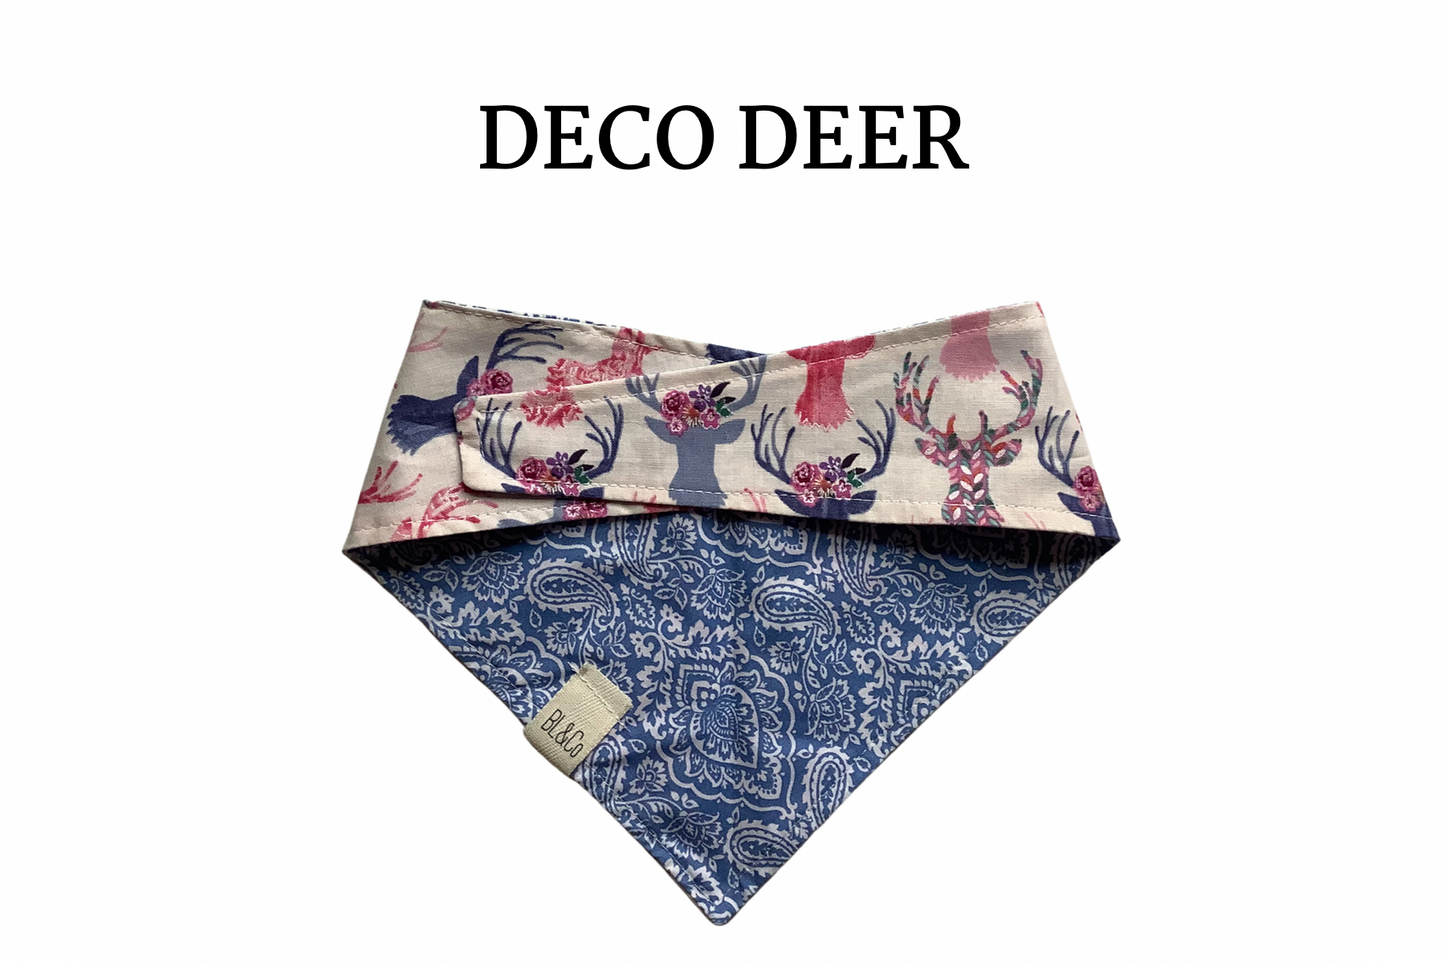 Decorative Deer Heads & Paisley  Reversible, Tie/On Bandana